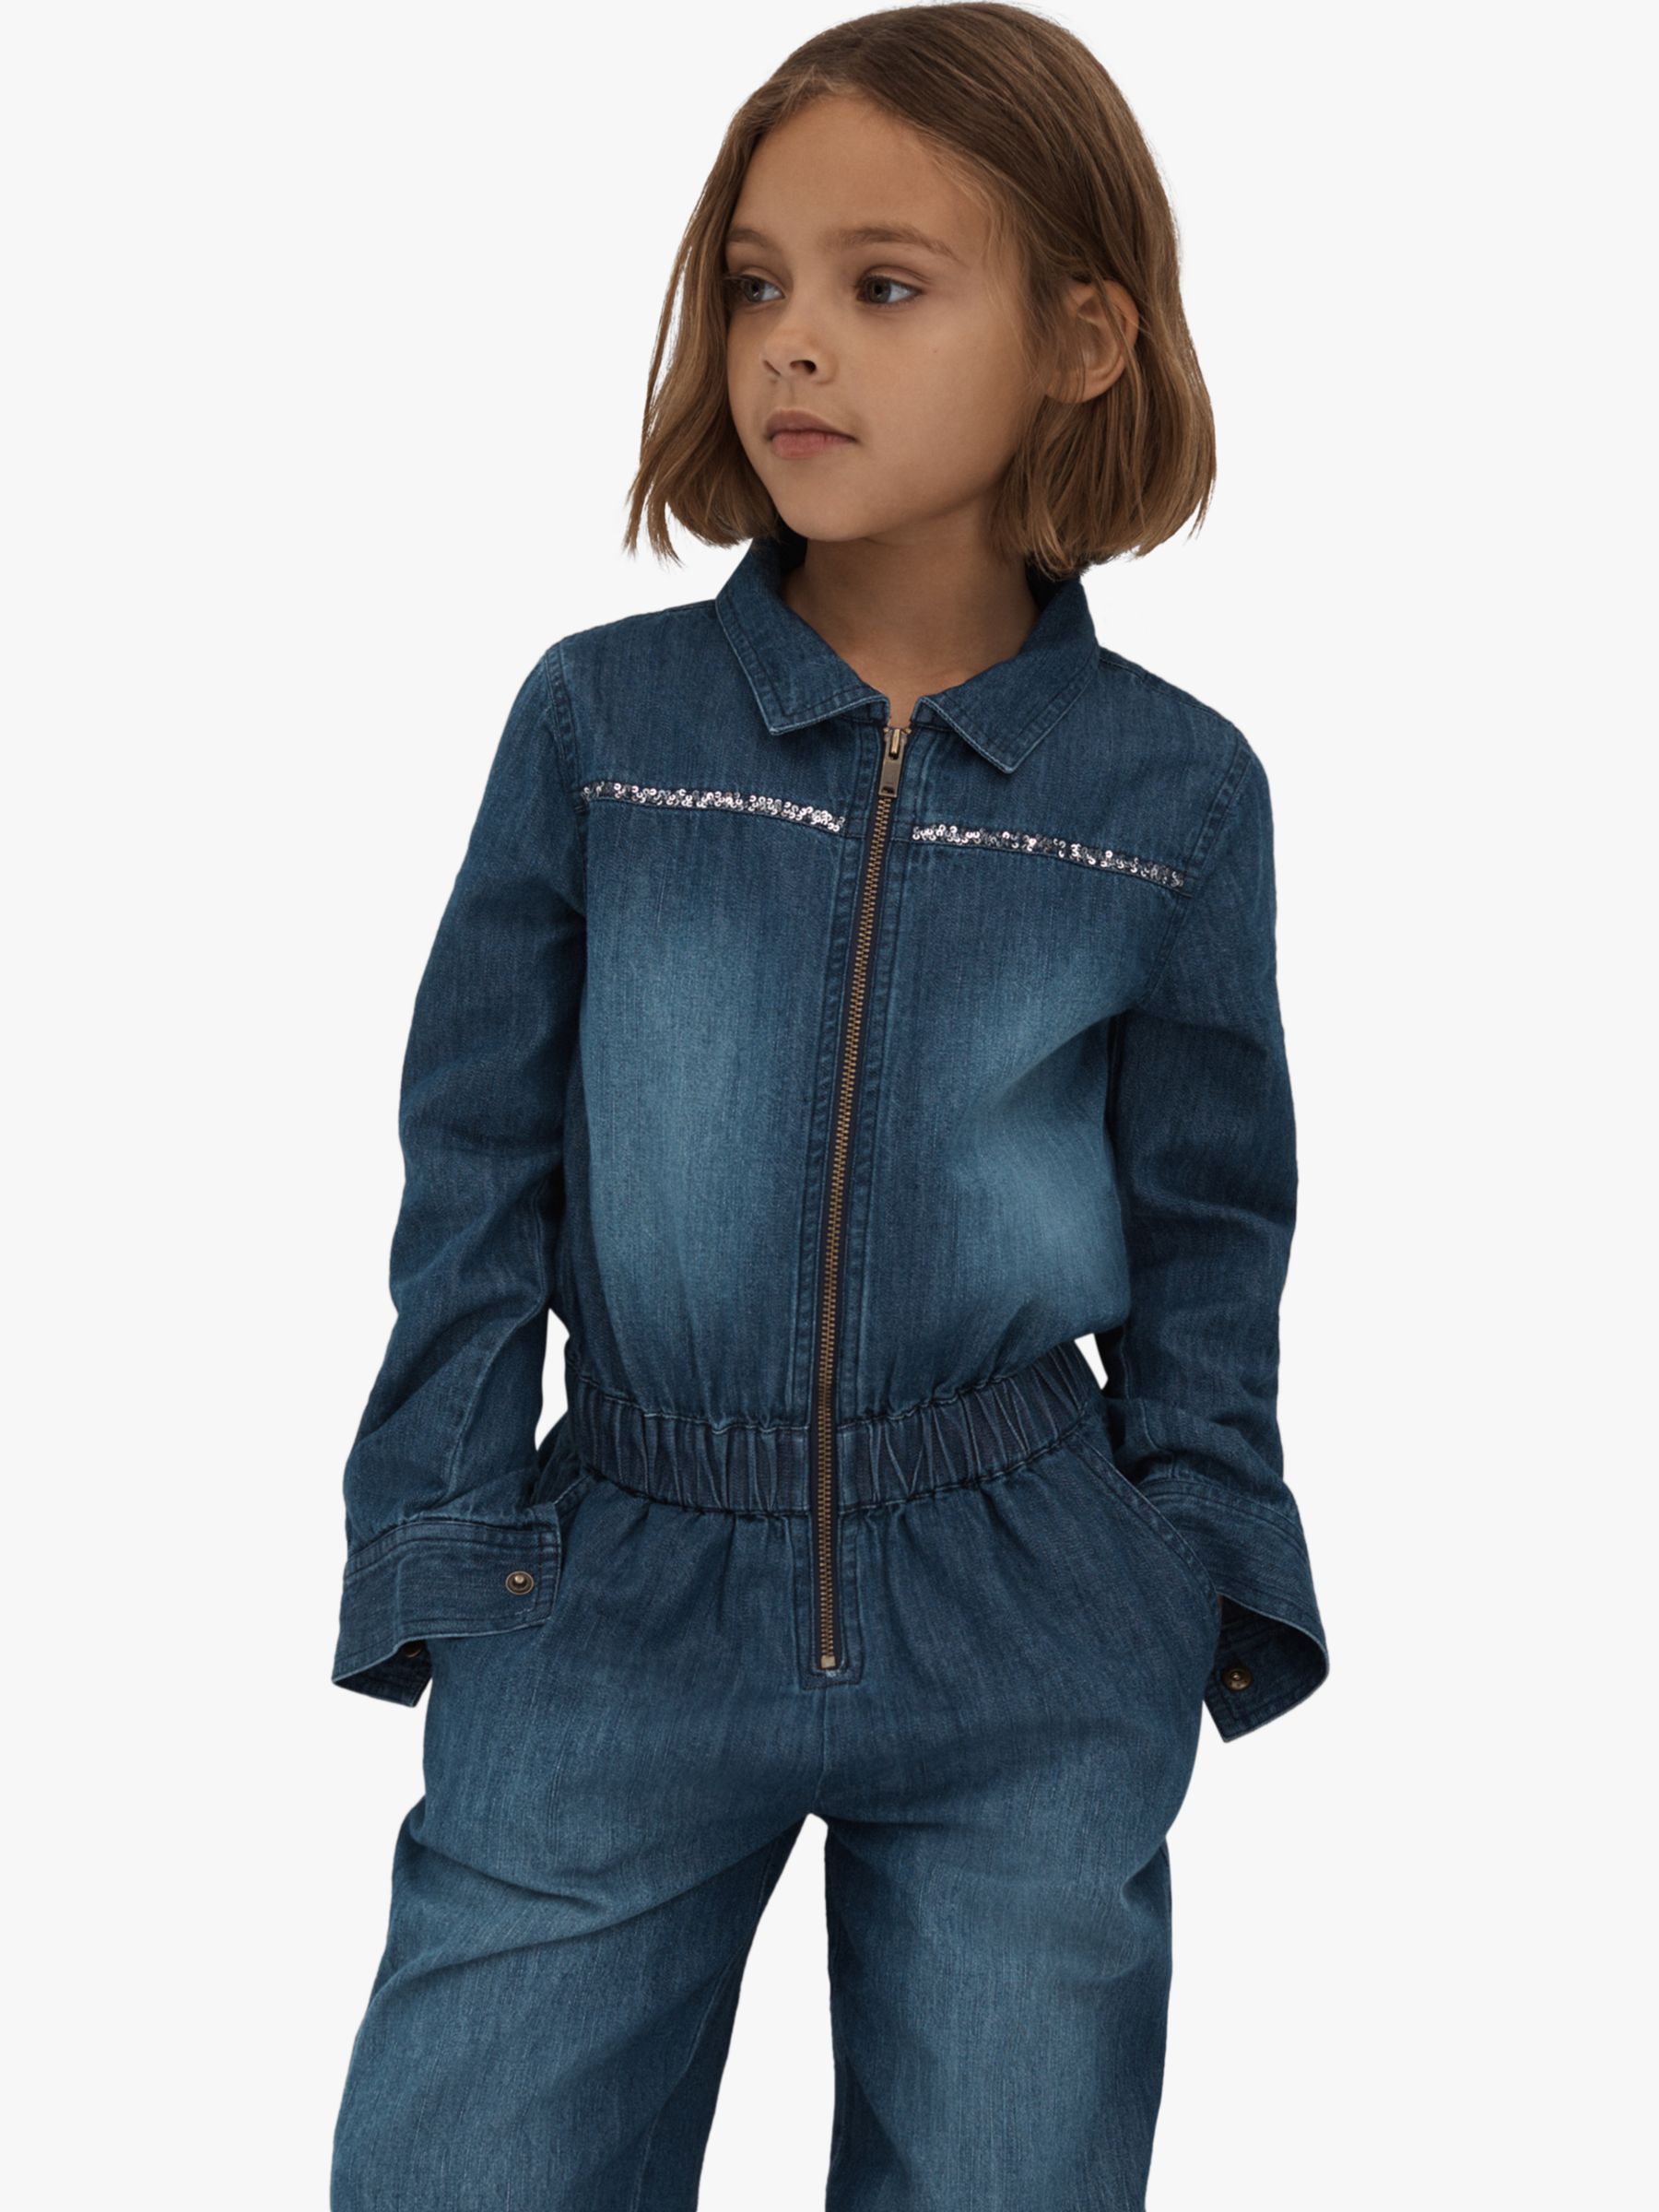 Reiss Kids' Marnie Elasticated Embellished Denim Jumpsuit, Blue, 9-10 years